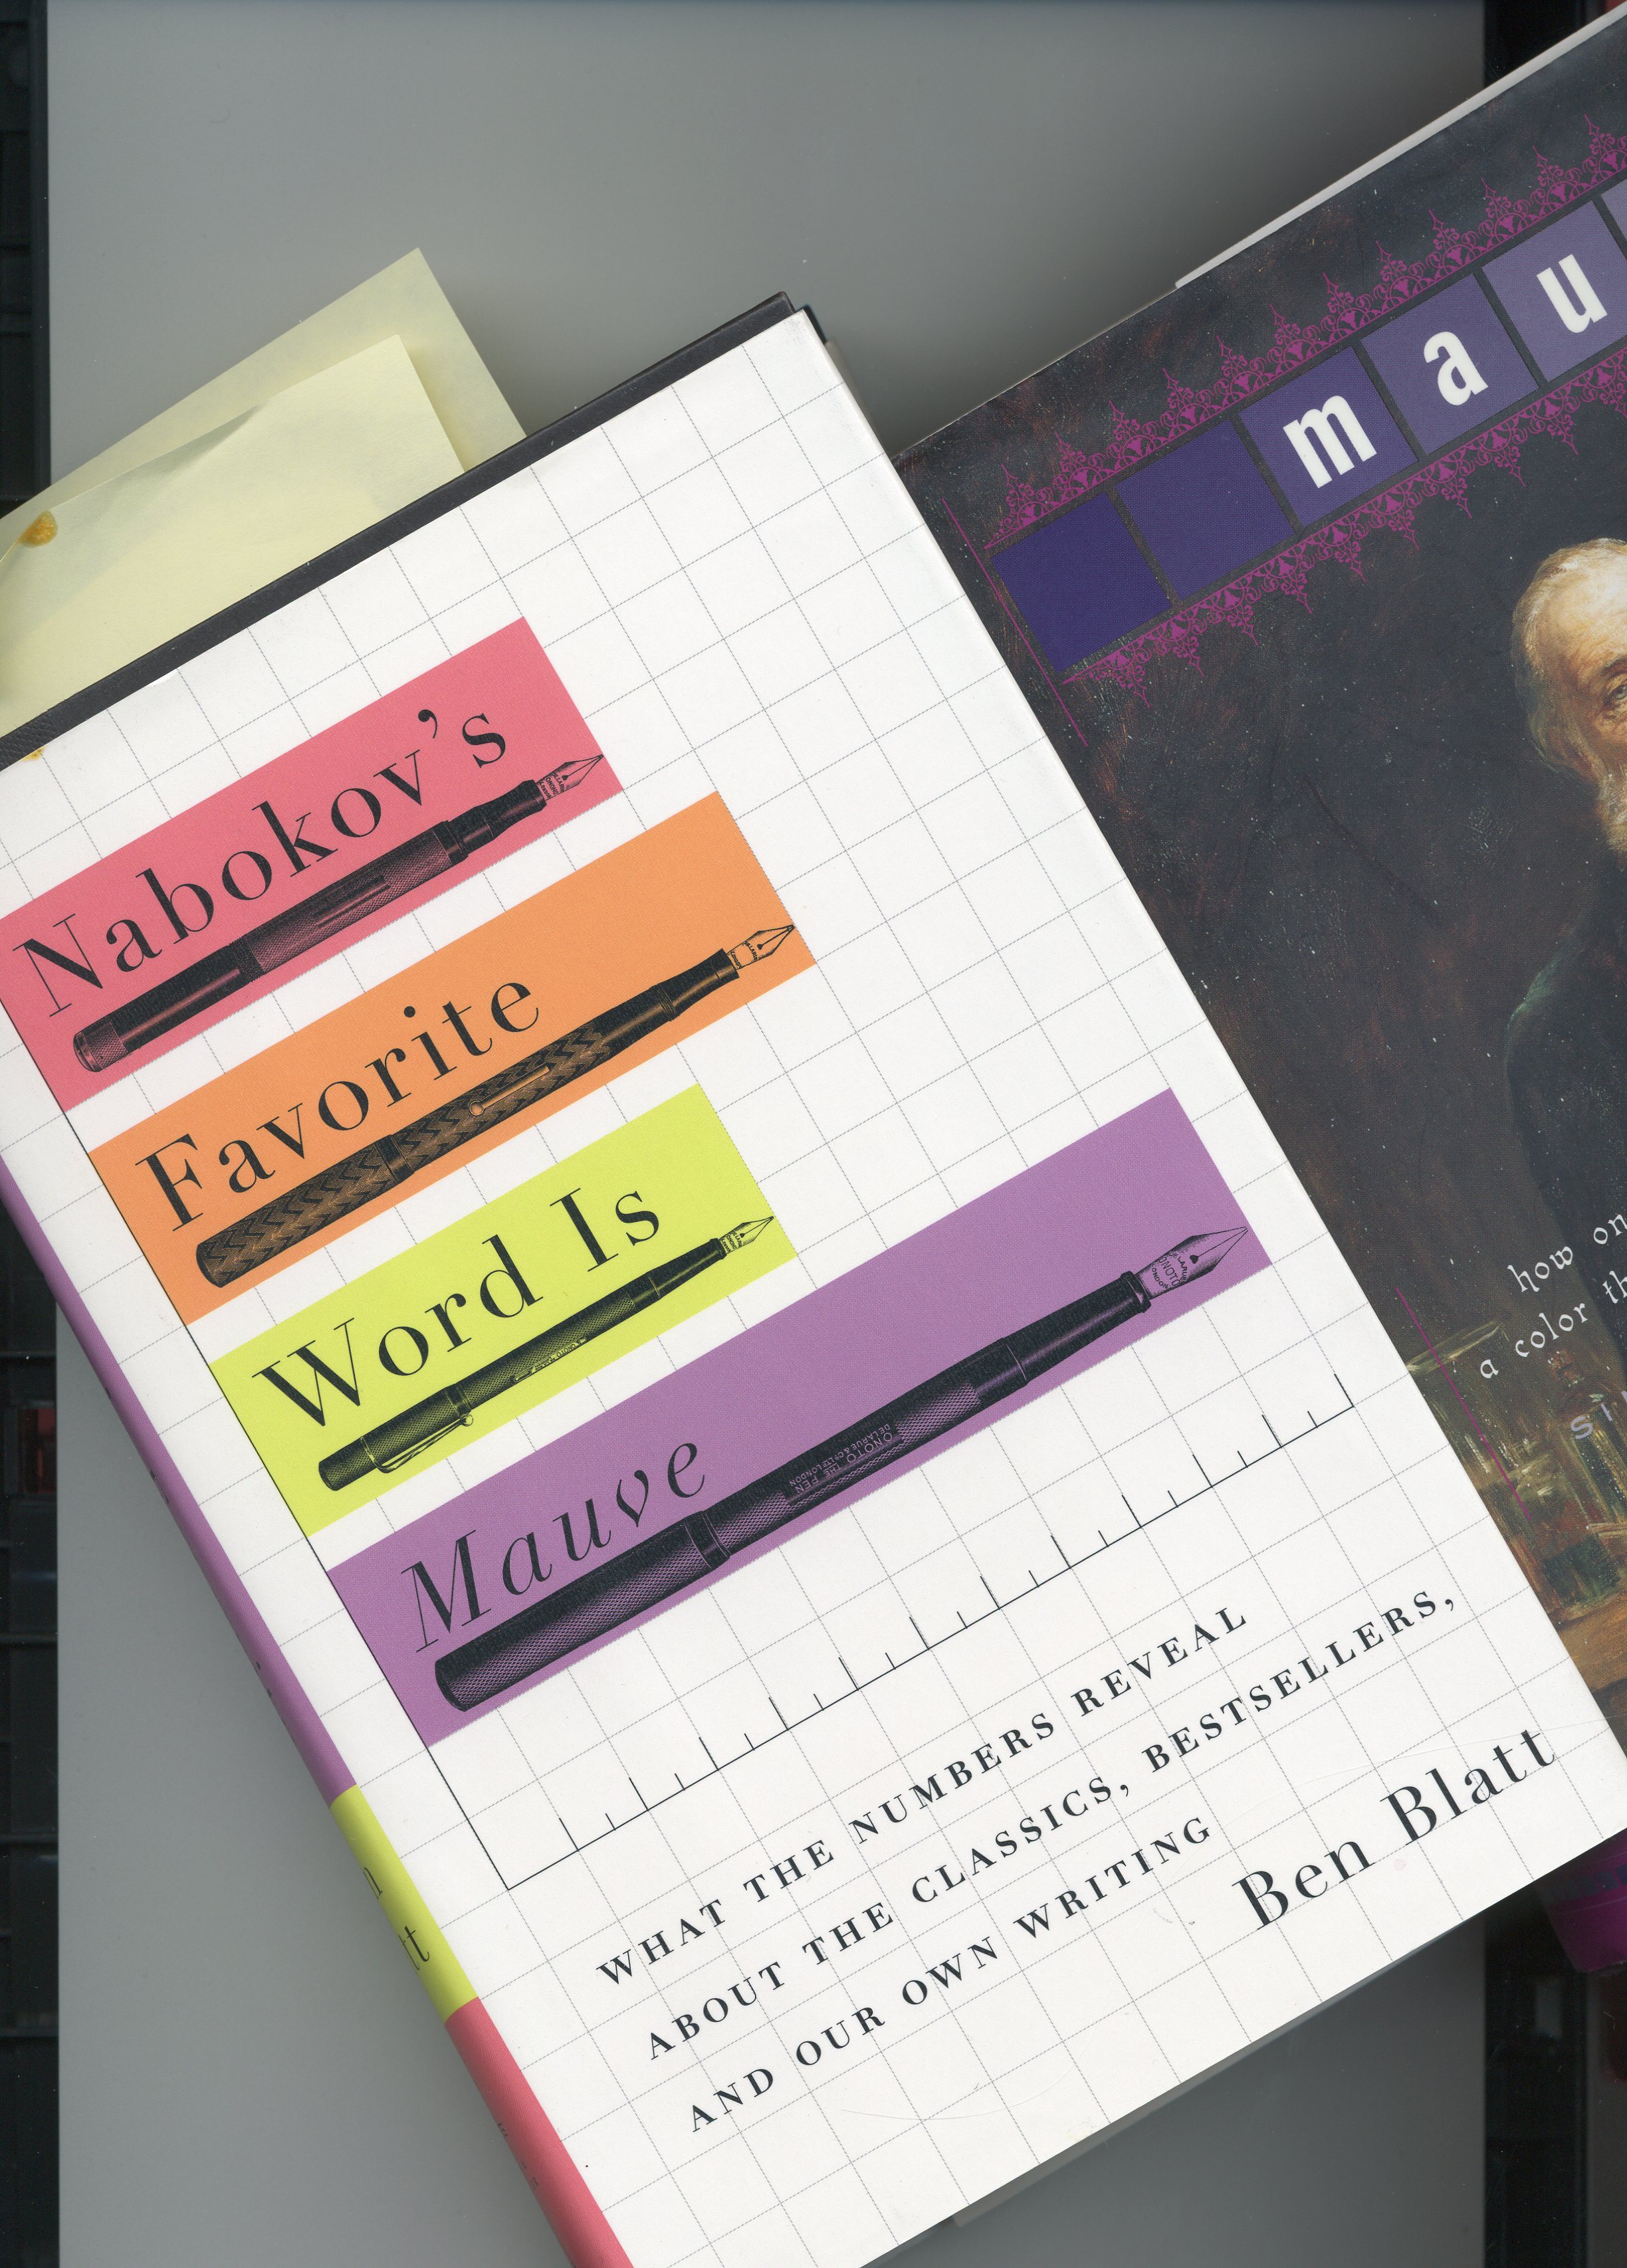 Book #8 in 2018: “Nabokov’s Favorite Word Is Mauve” by Ben Blatt